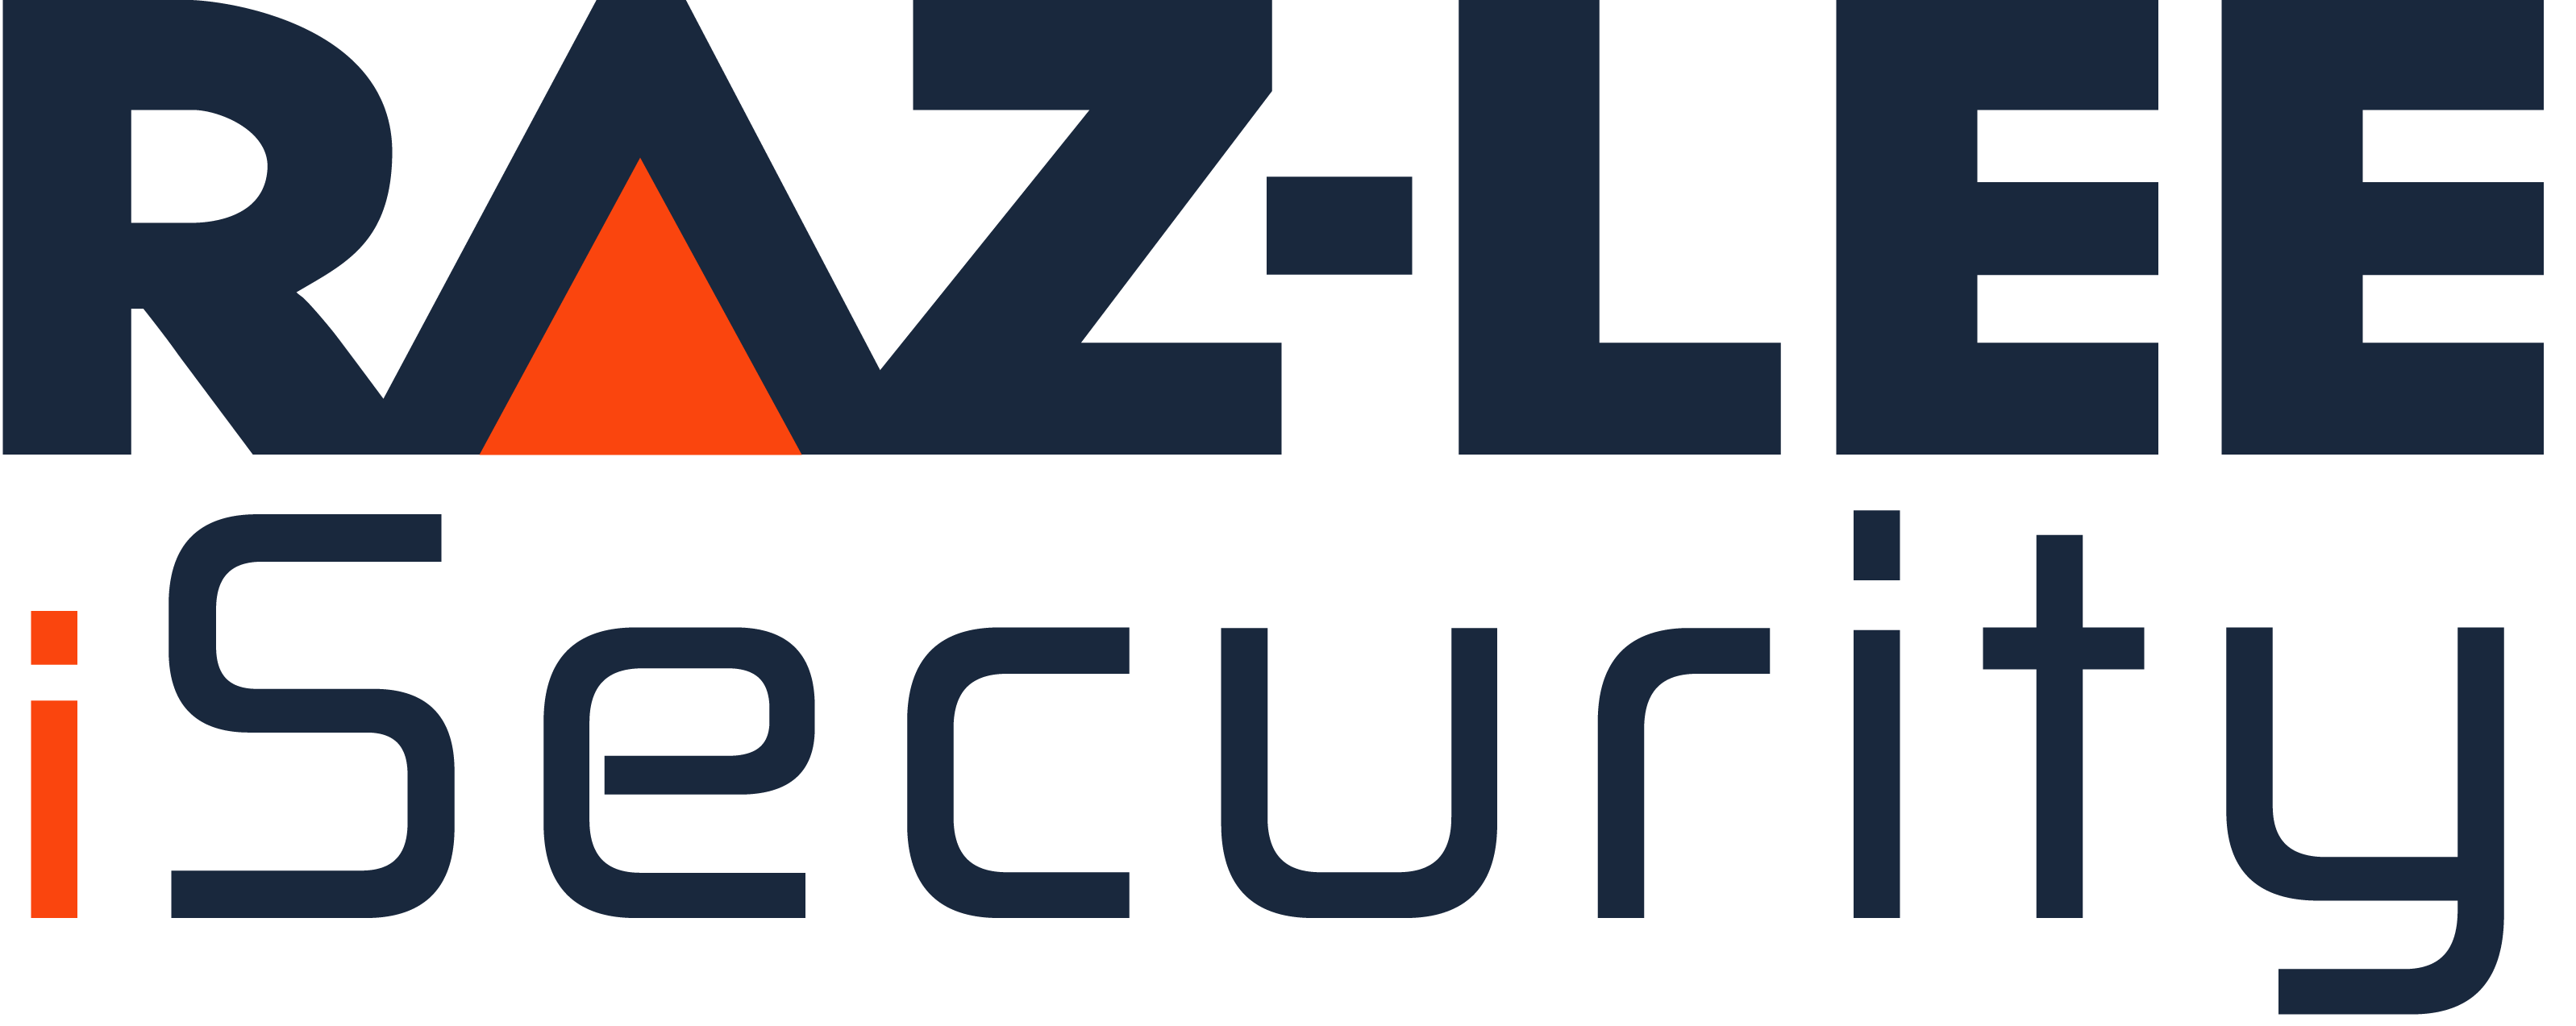 Raz-Lee Security Logo